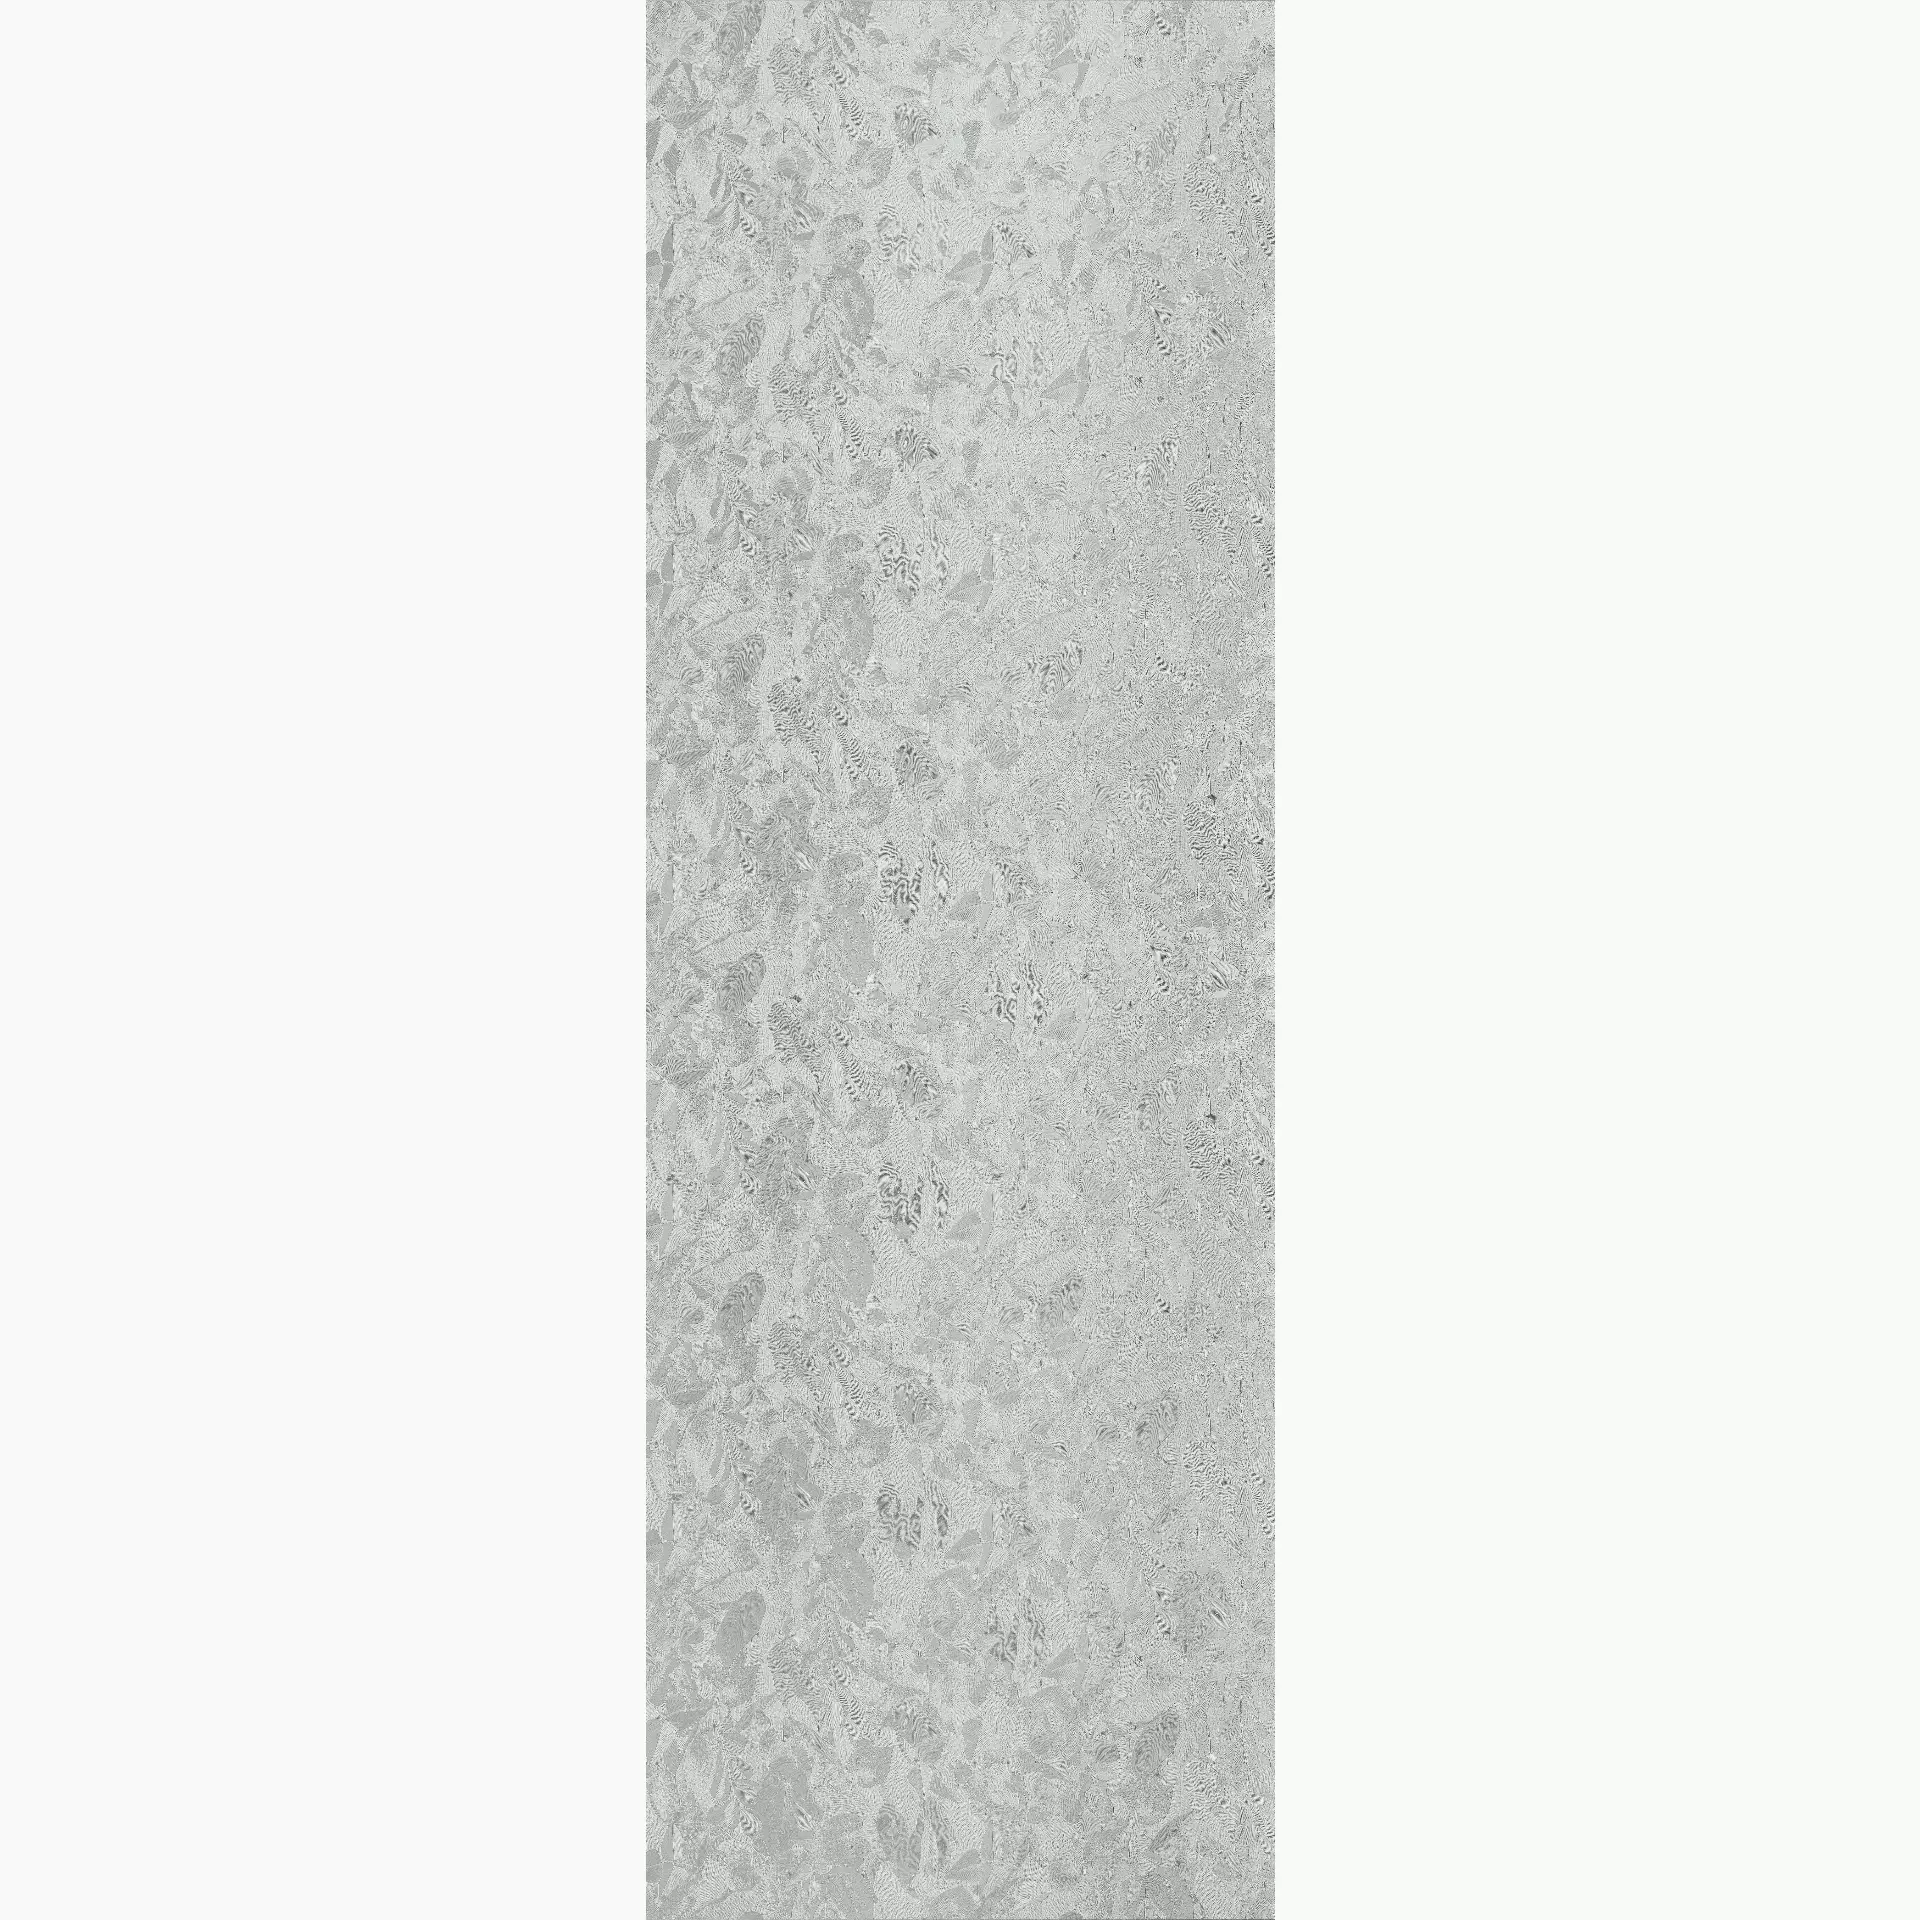 Cottodeste Kerlite Wonderwall Silver Leaf Struttura Decor EK7WP10 100x300cm 3,5mm